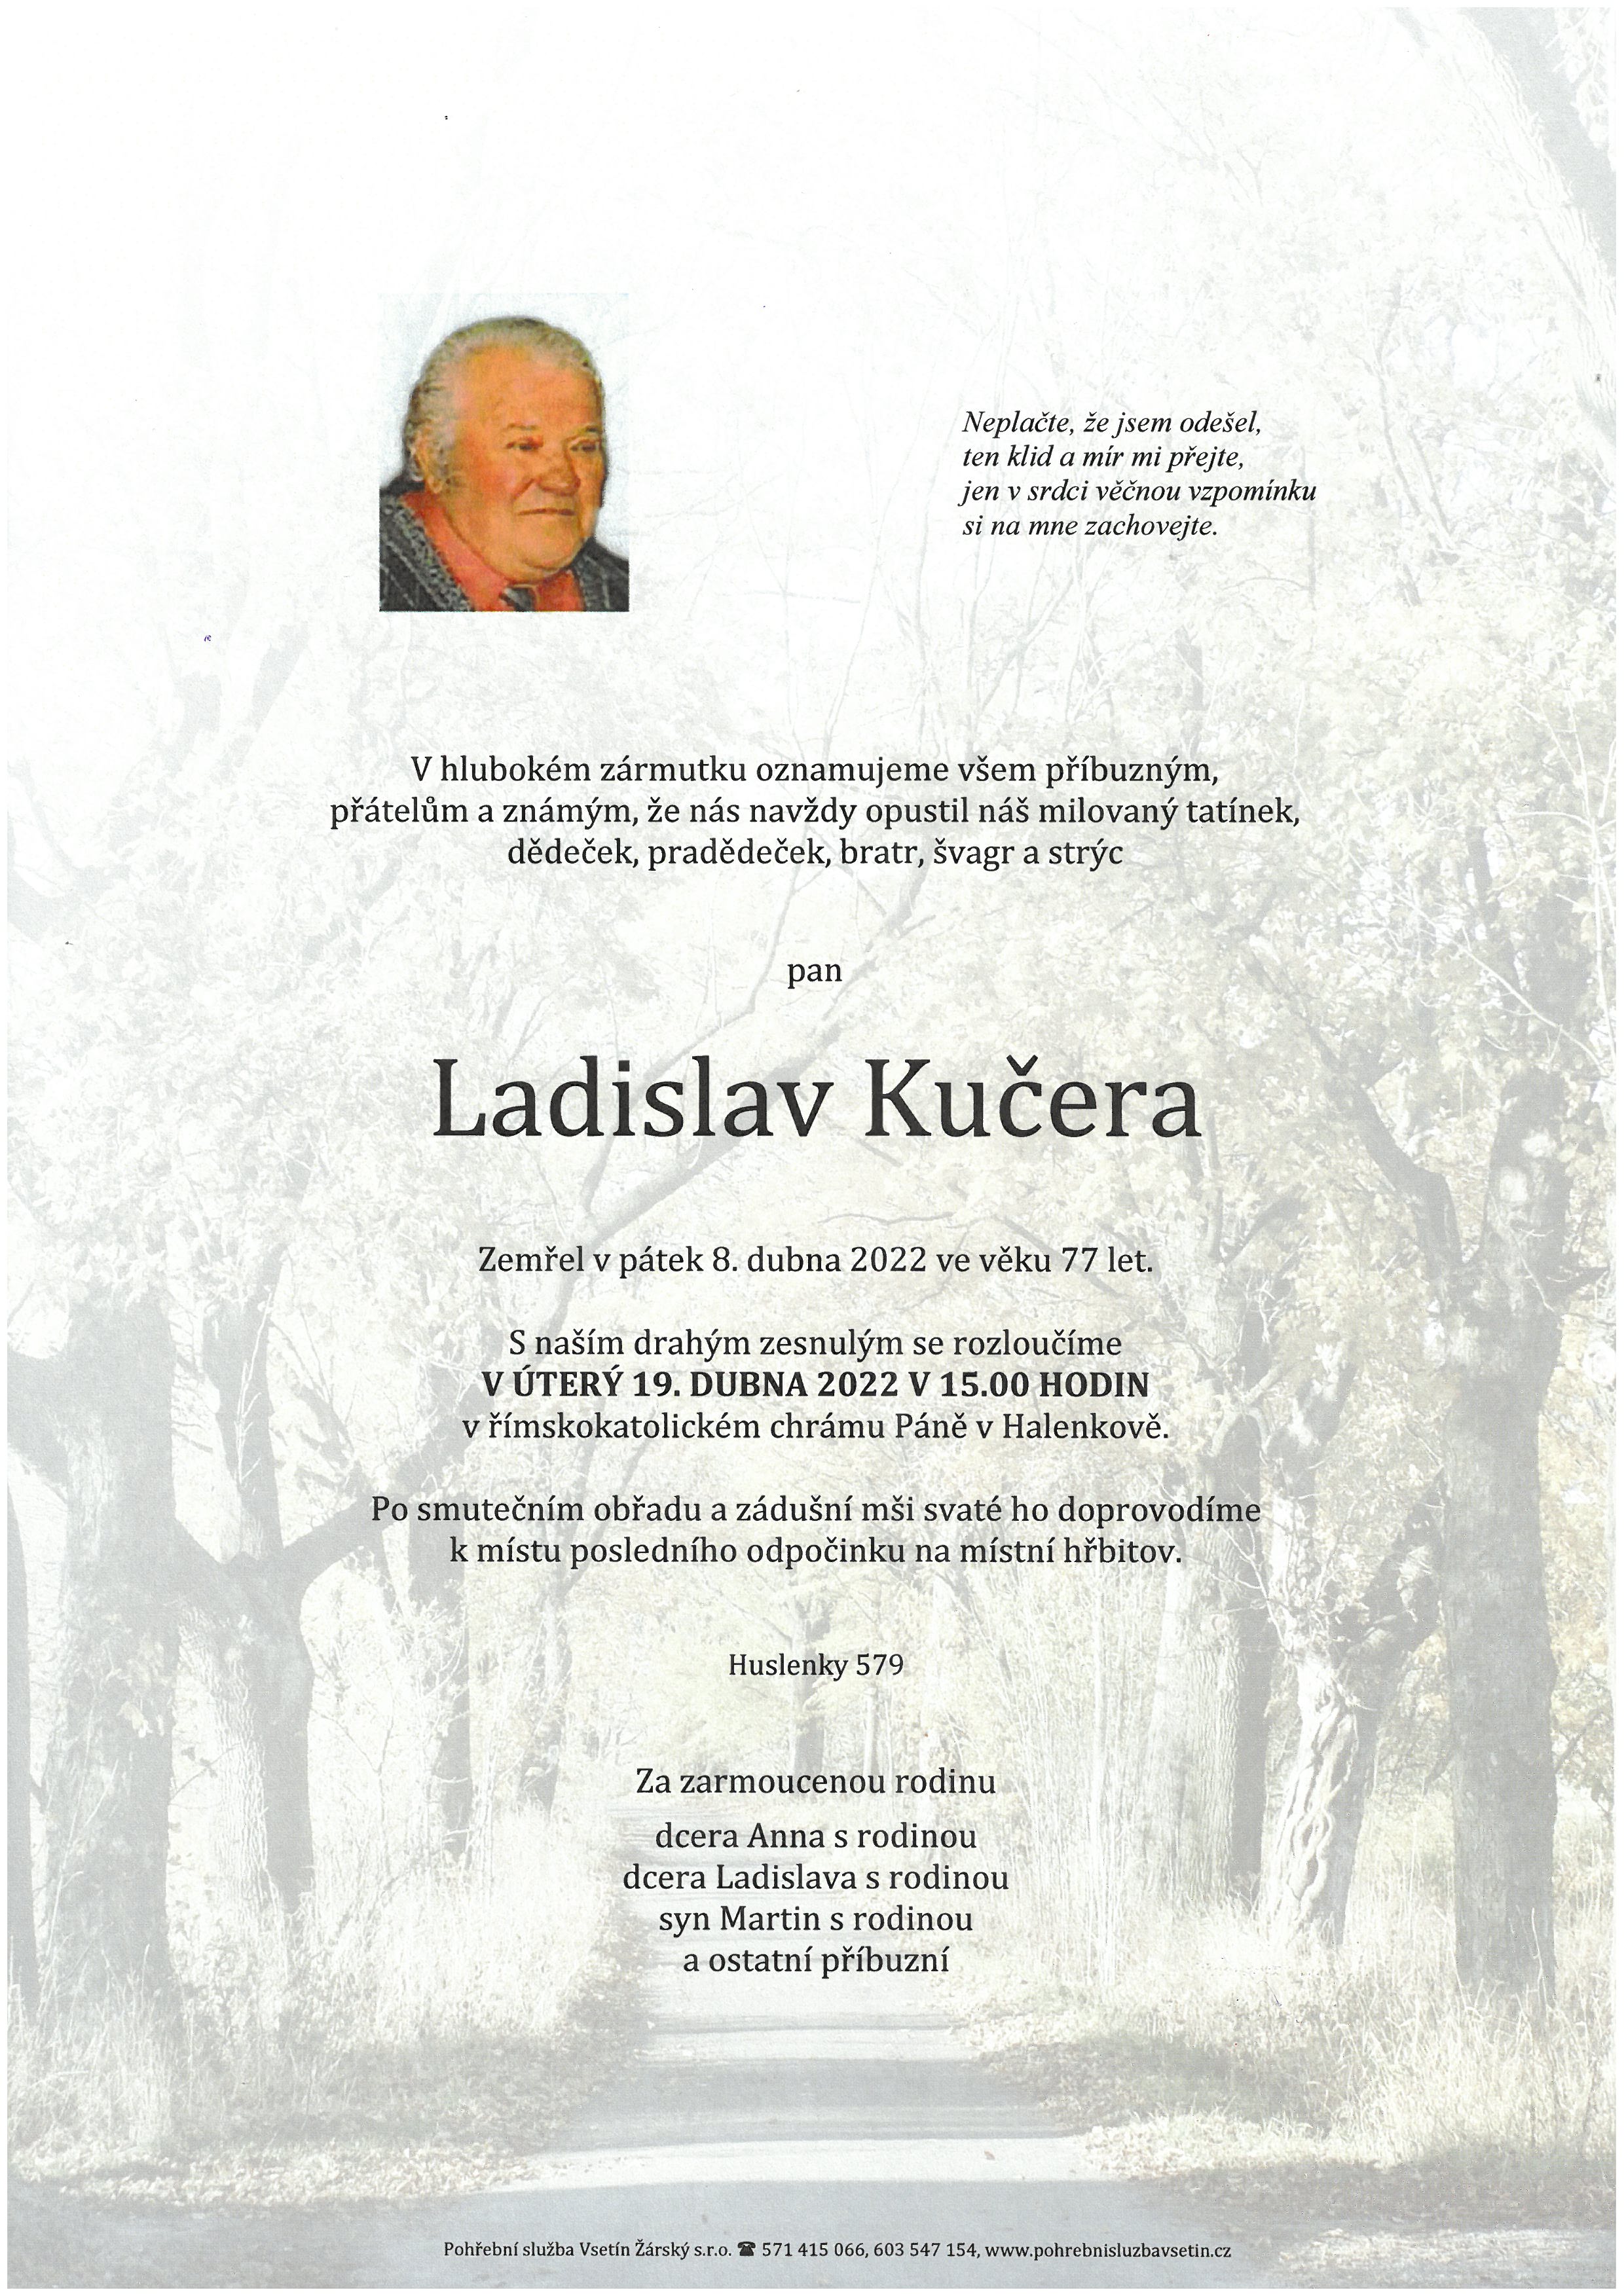 Ladislav Kučera